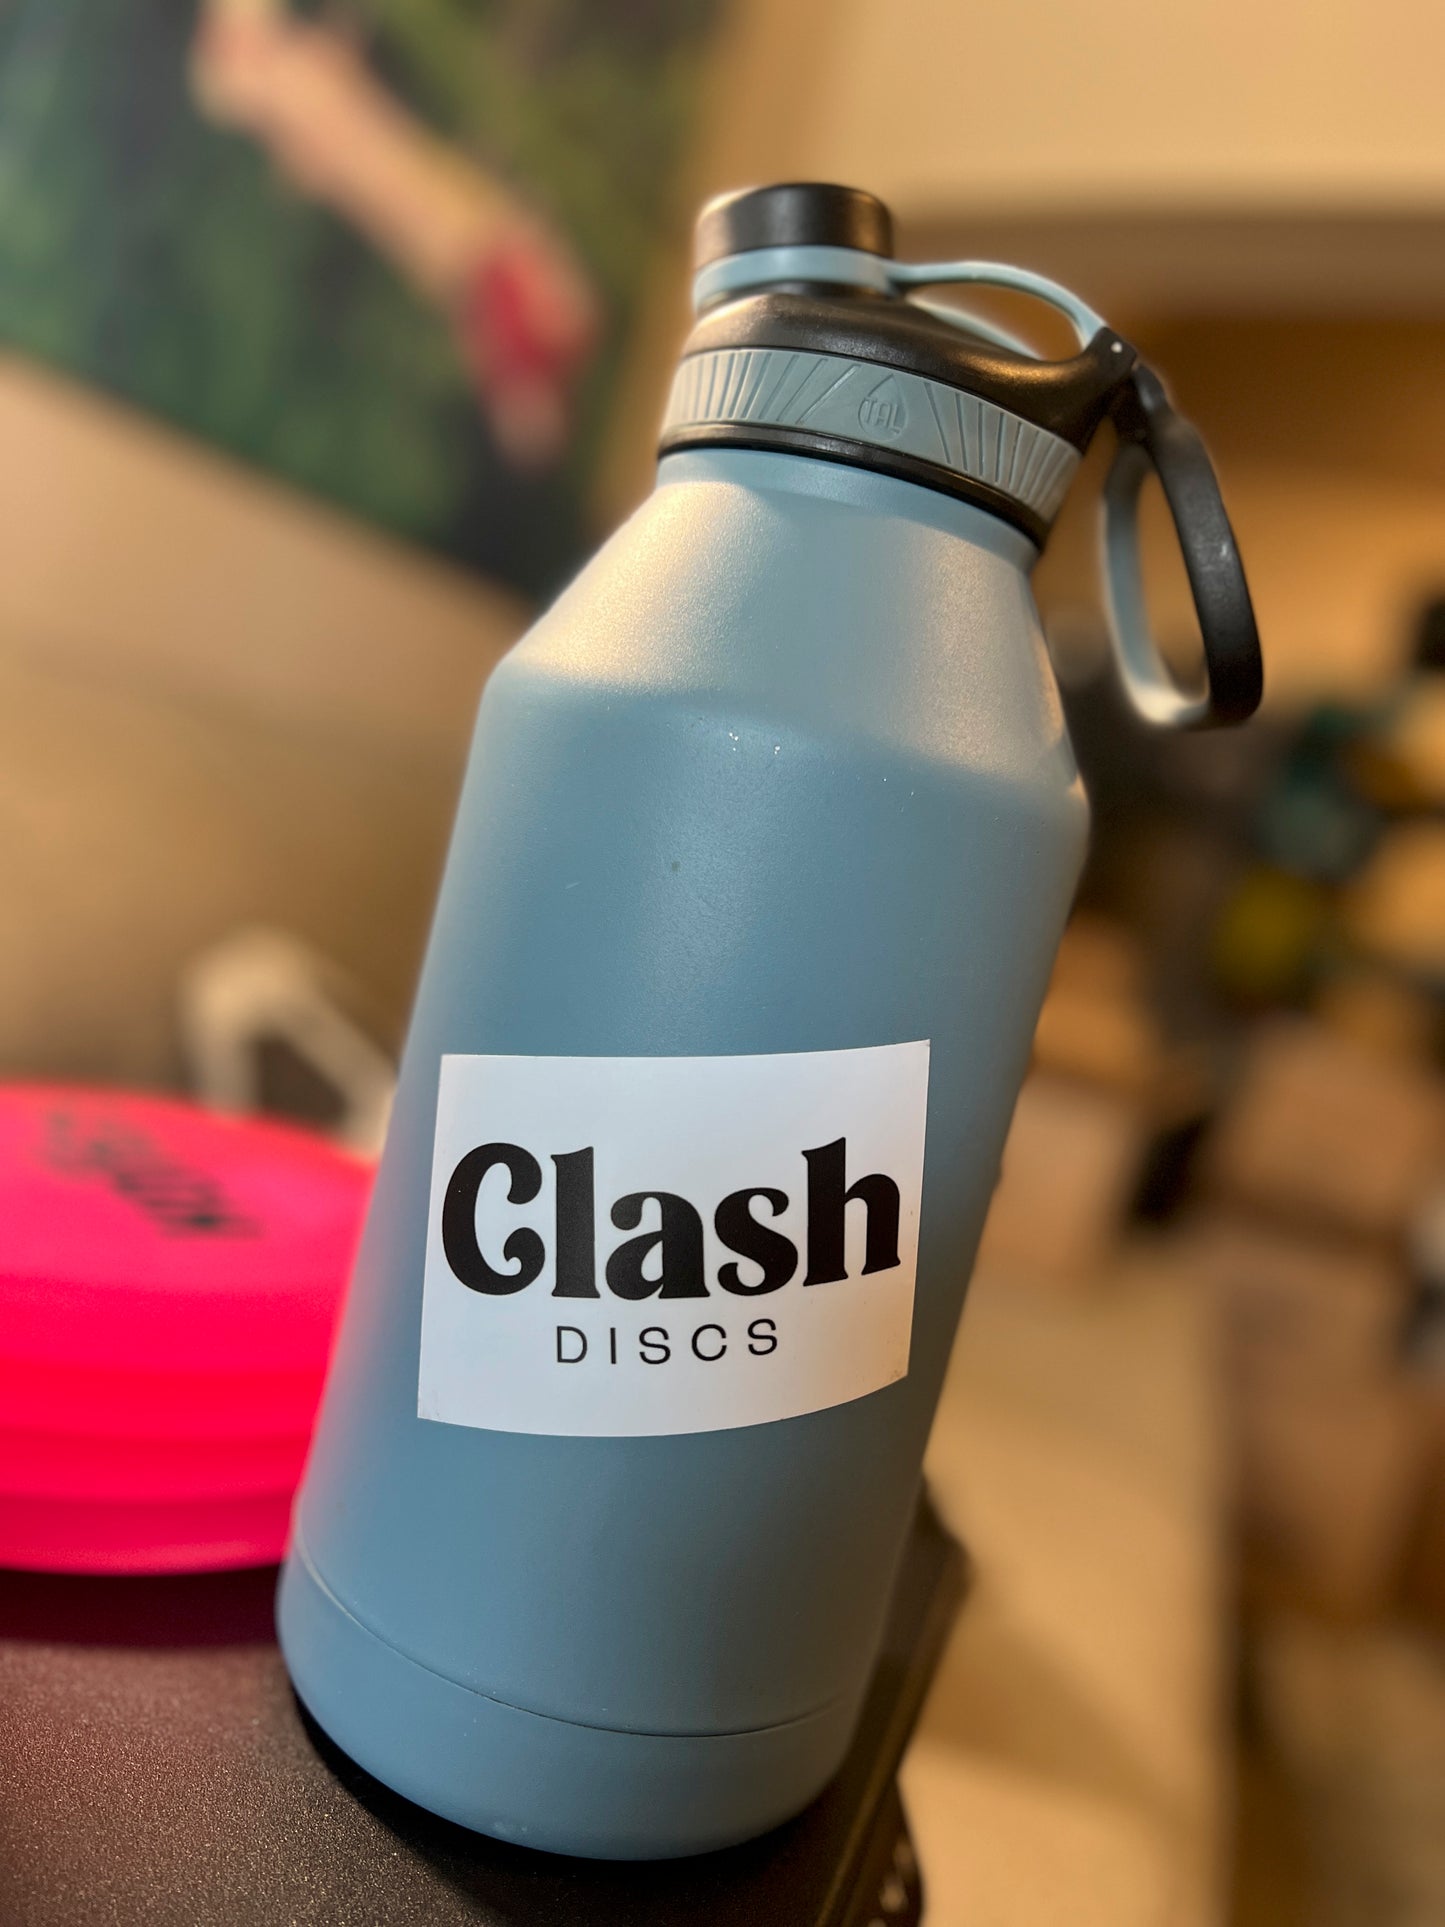 Clash Discs sticker on water bottle